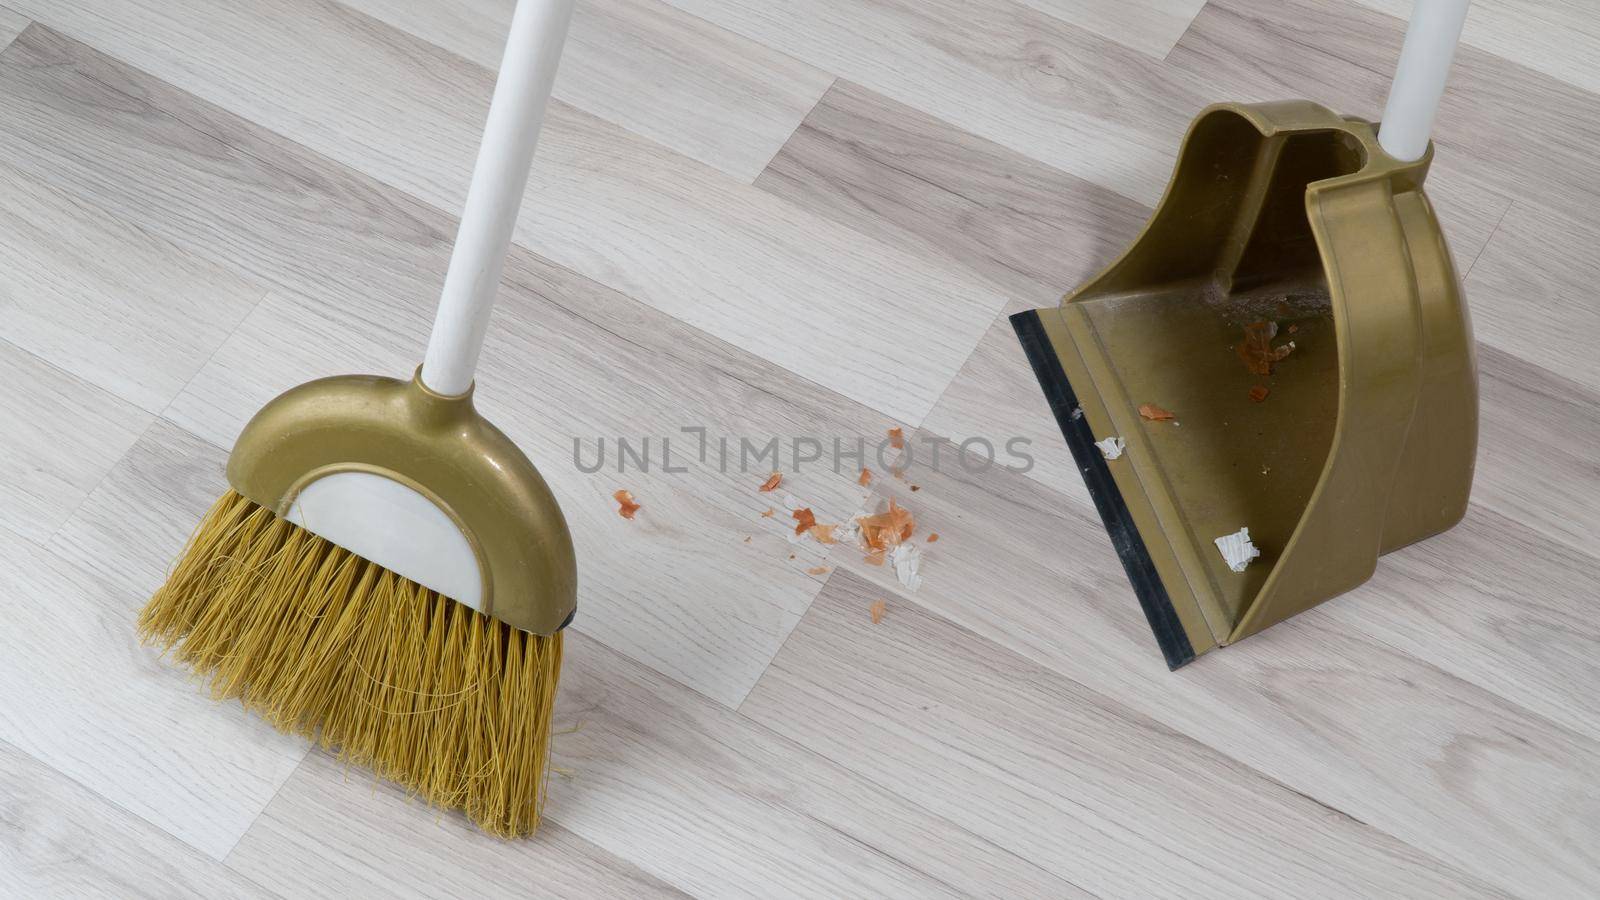 broom brush and scoop sweeping dirt off floor laminate by voktybre